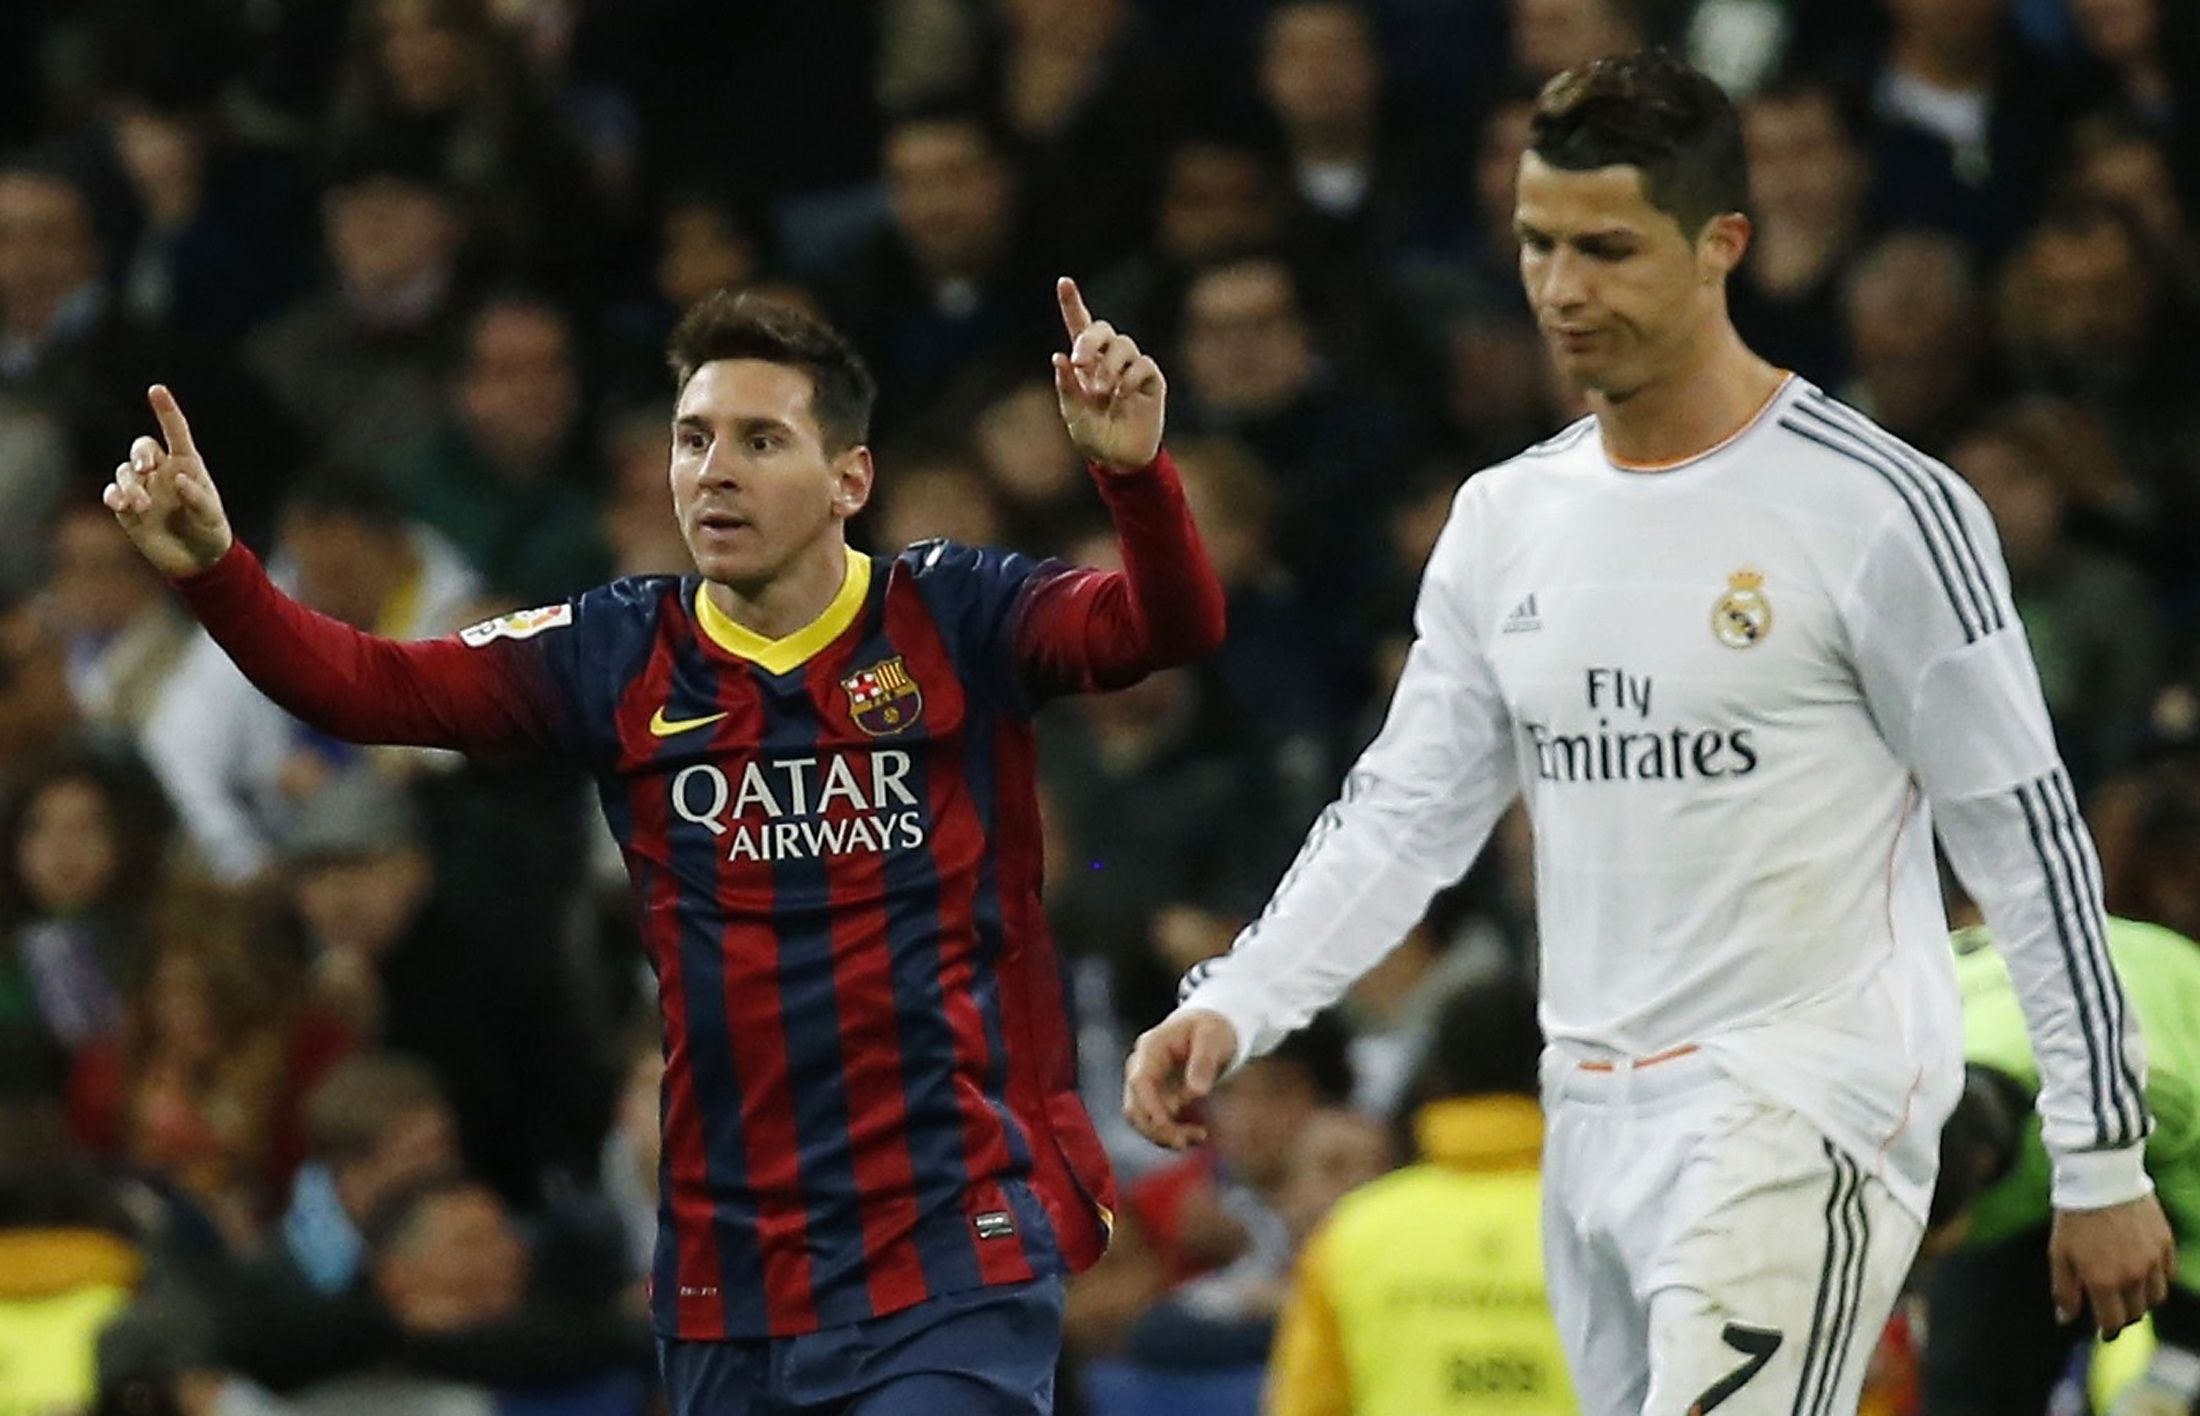 The Lionel Messi-Cristiano Ronaldo rivalry comes to an absurd